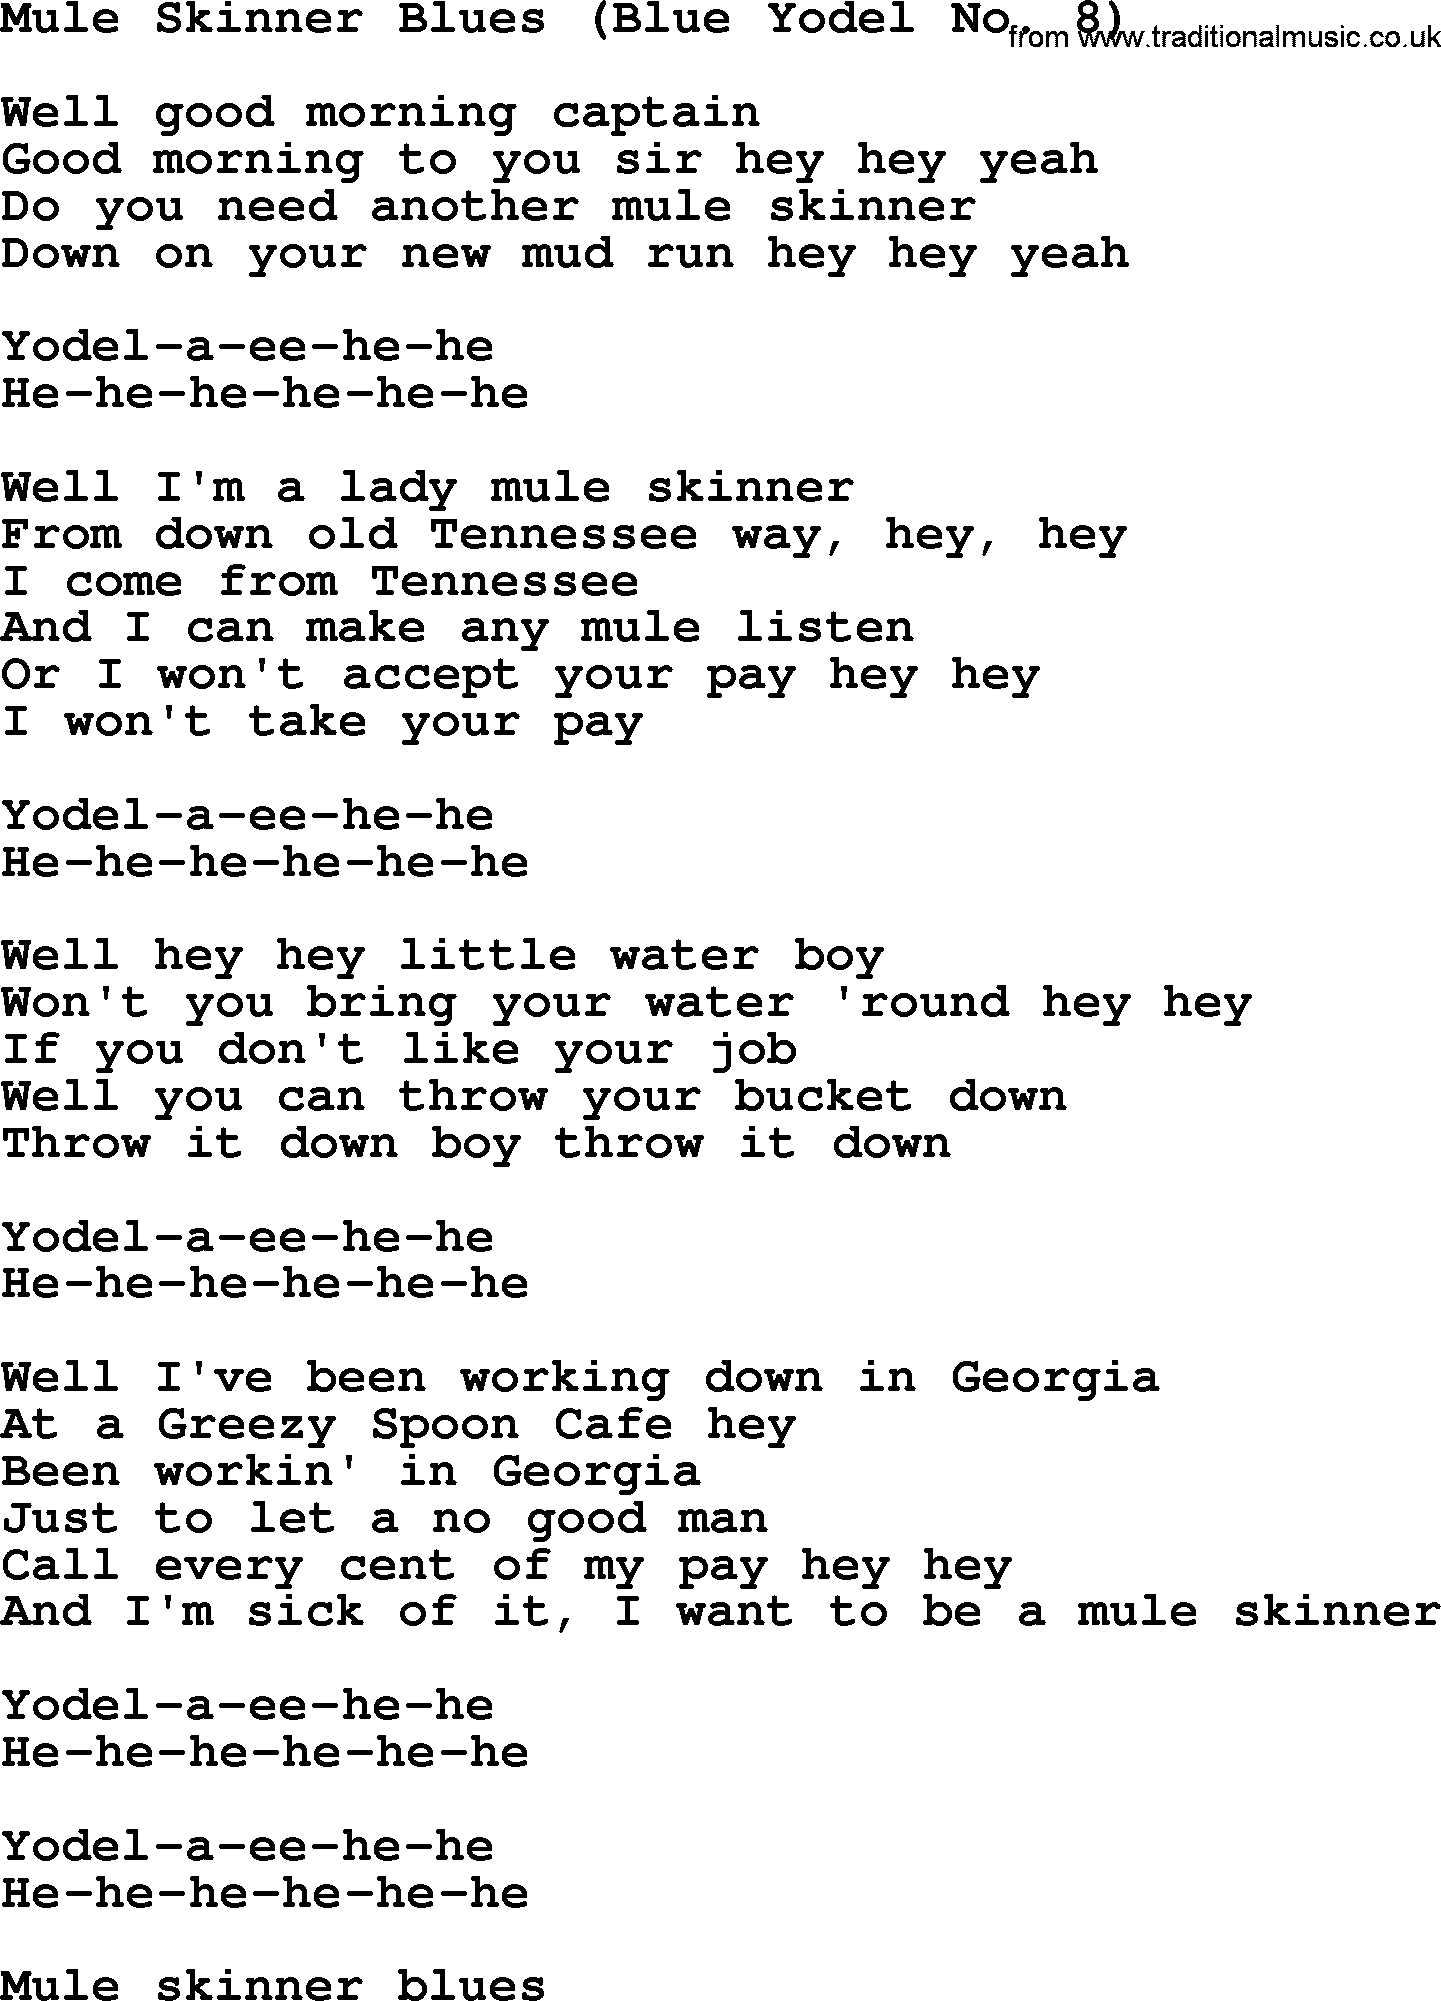 Dolly Parton song Mule Skinner Blues (Blue Yodel No. 8).txt lyrics